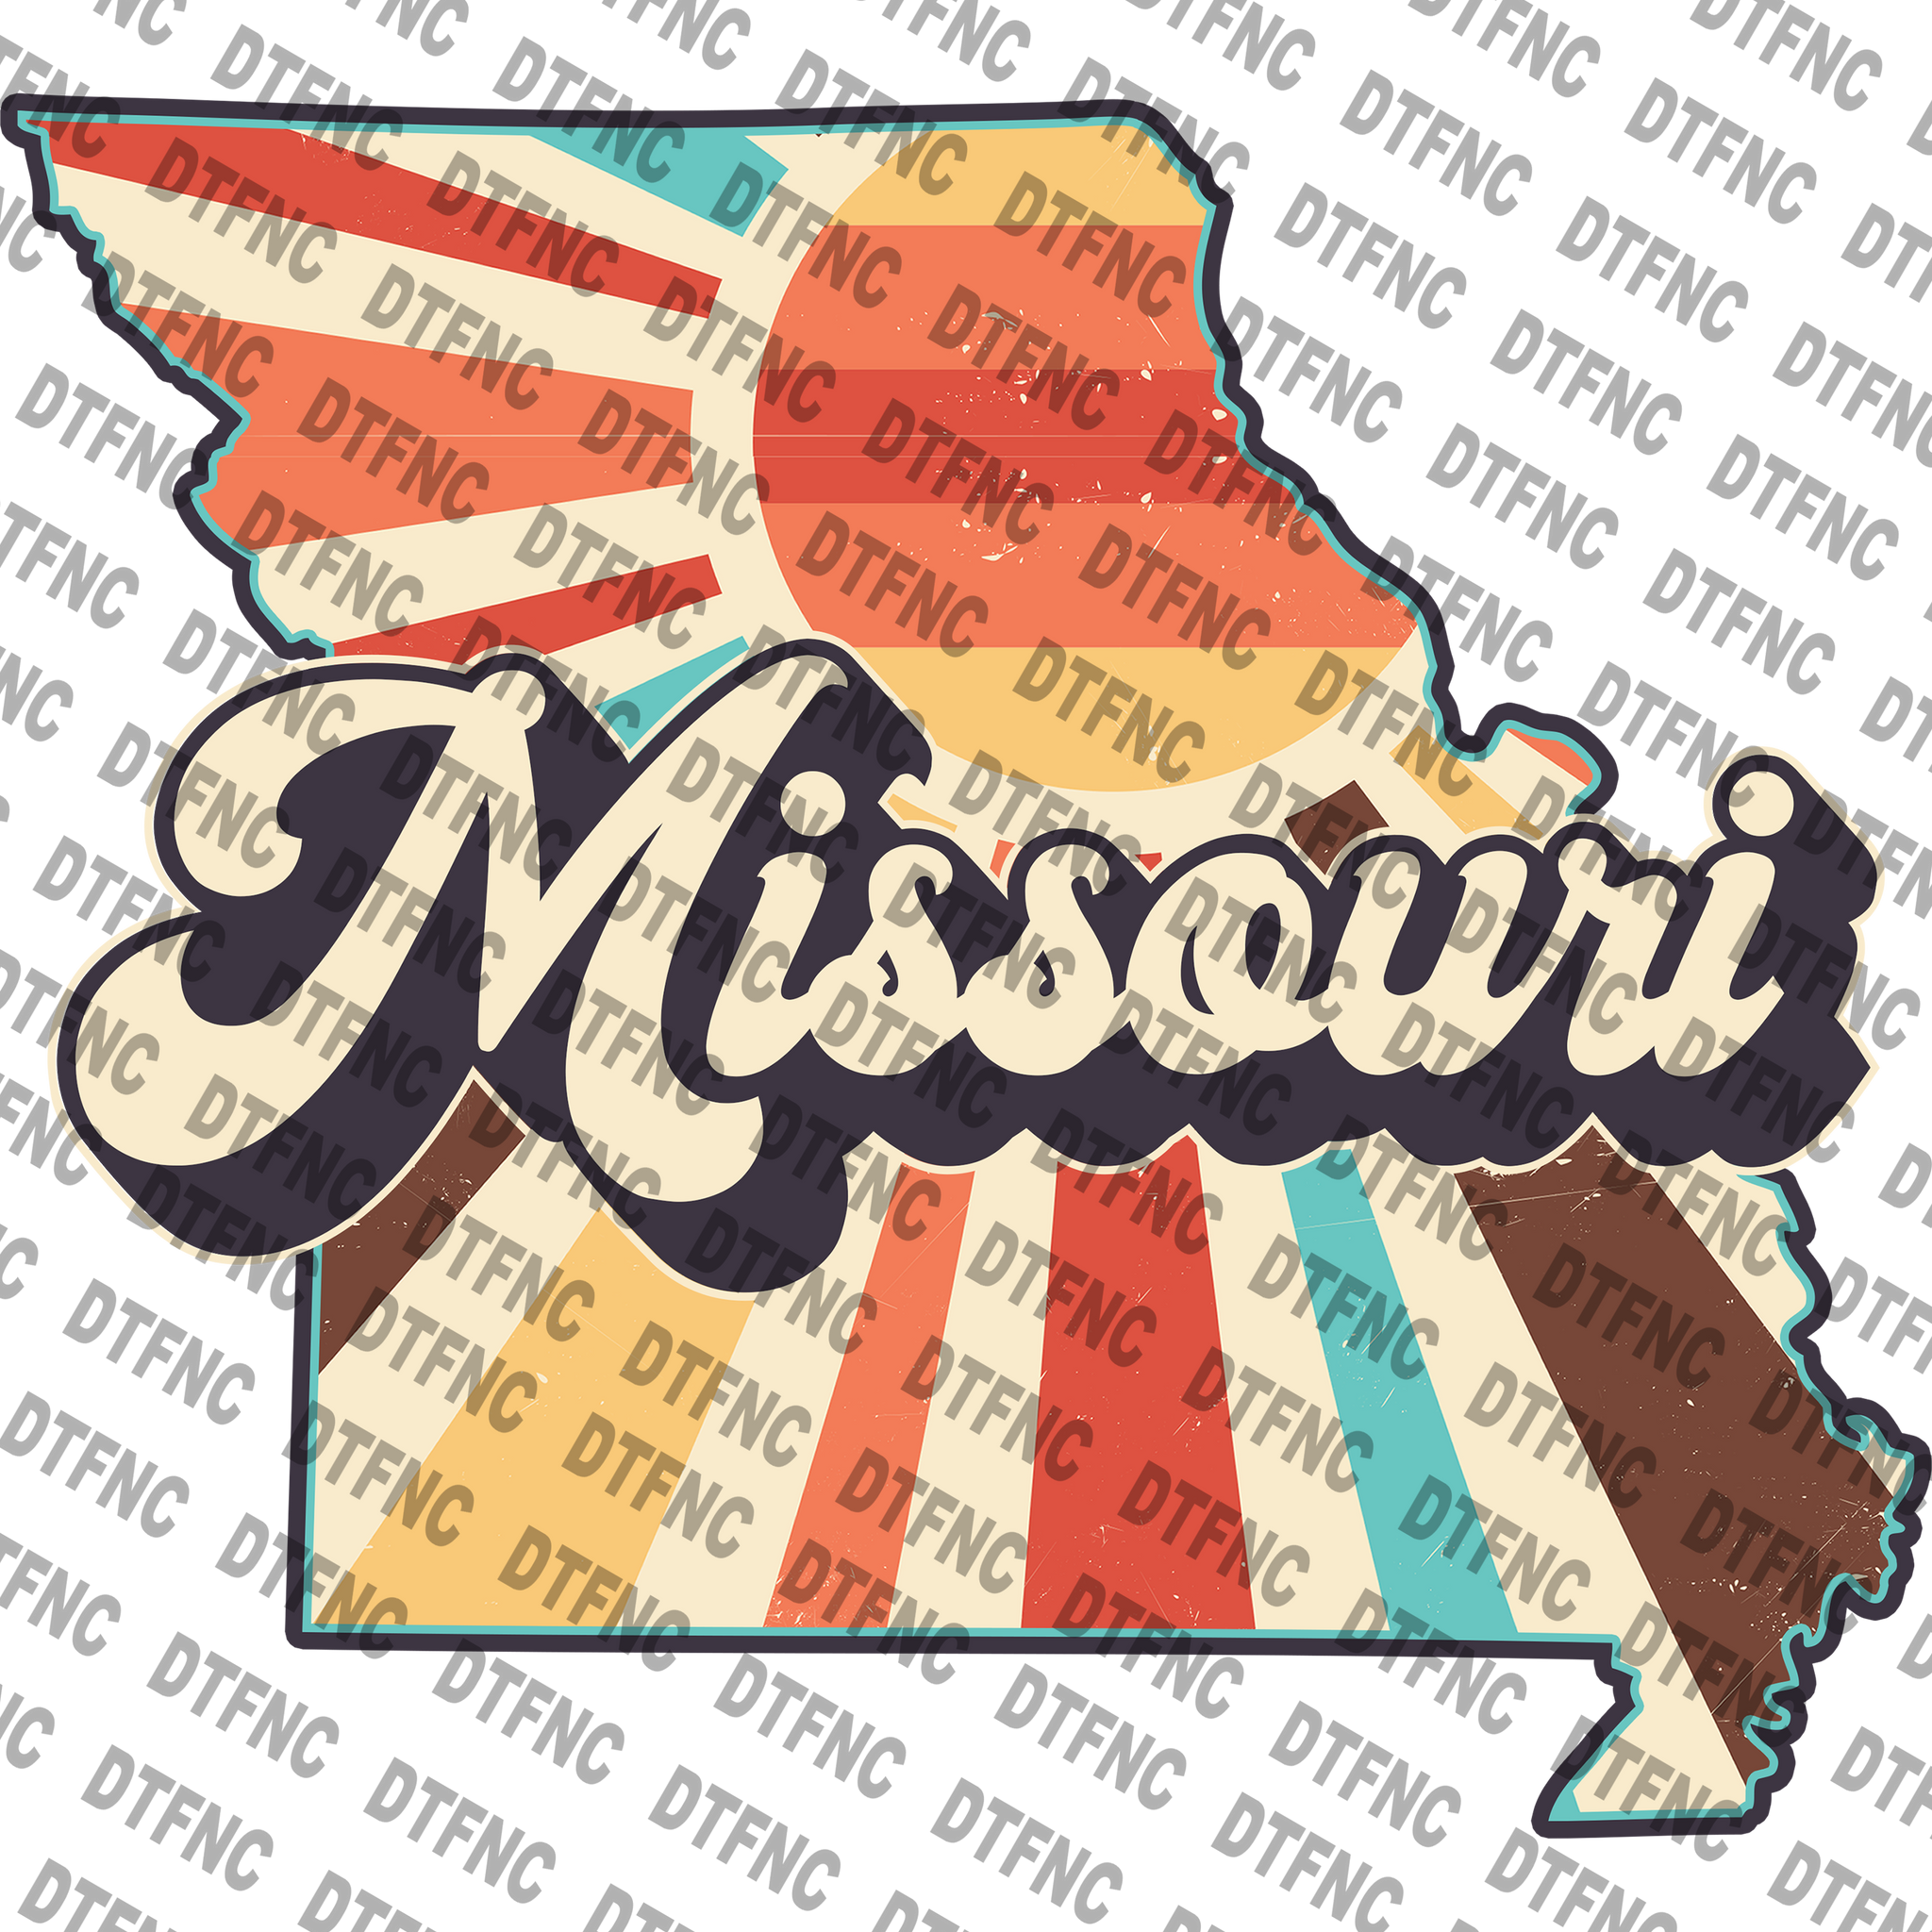 State - Missouri